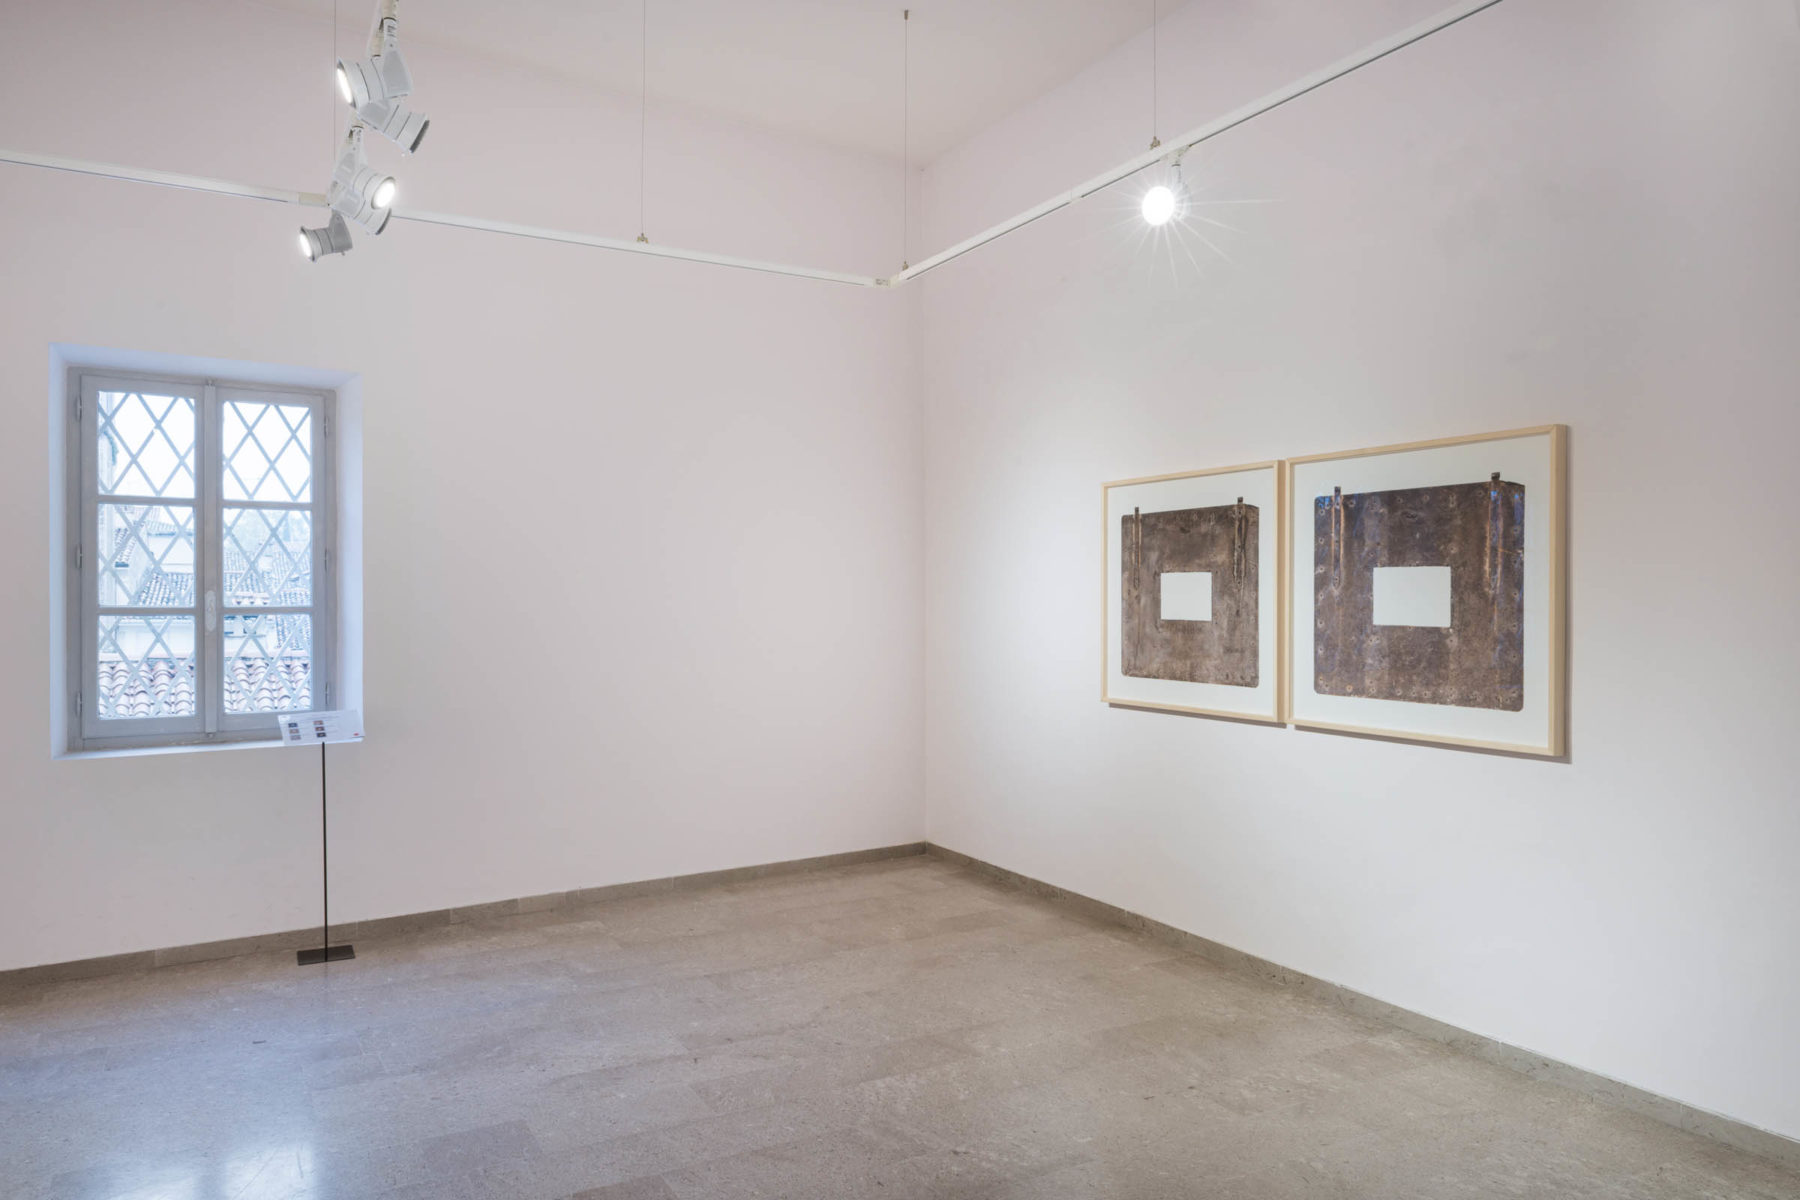 Alessandra Lazzaris, Sindone, show view, Galleria Spazzapan